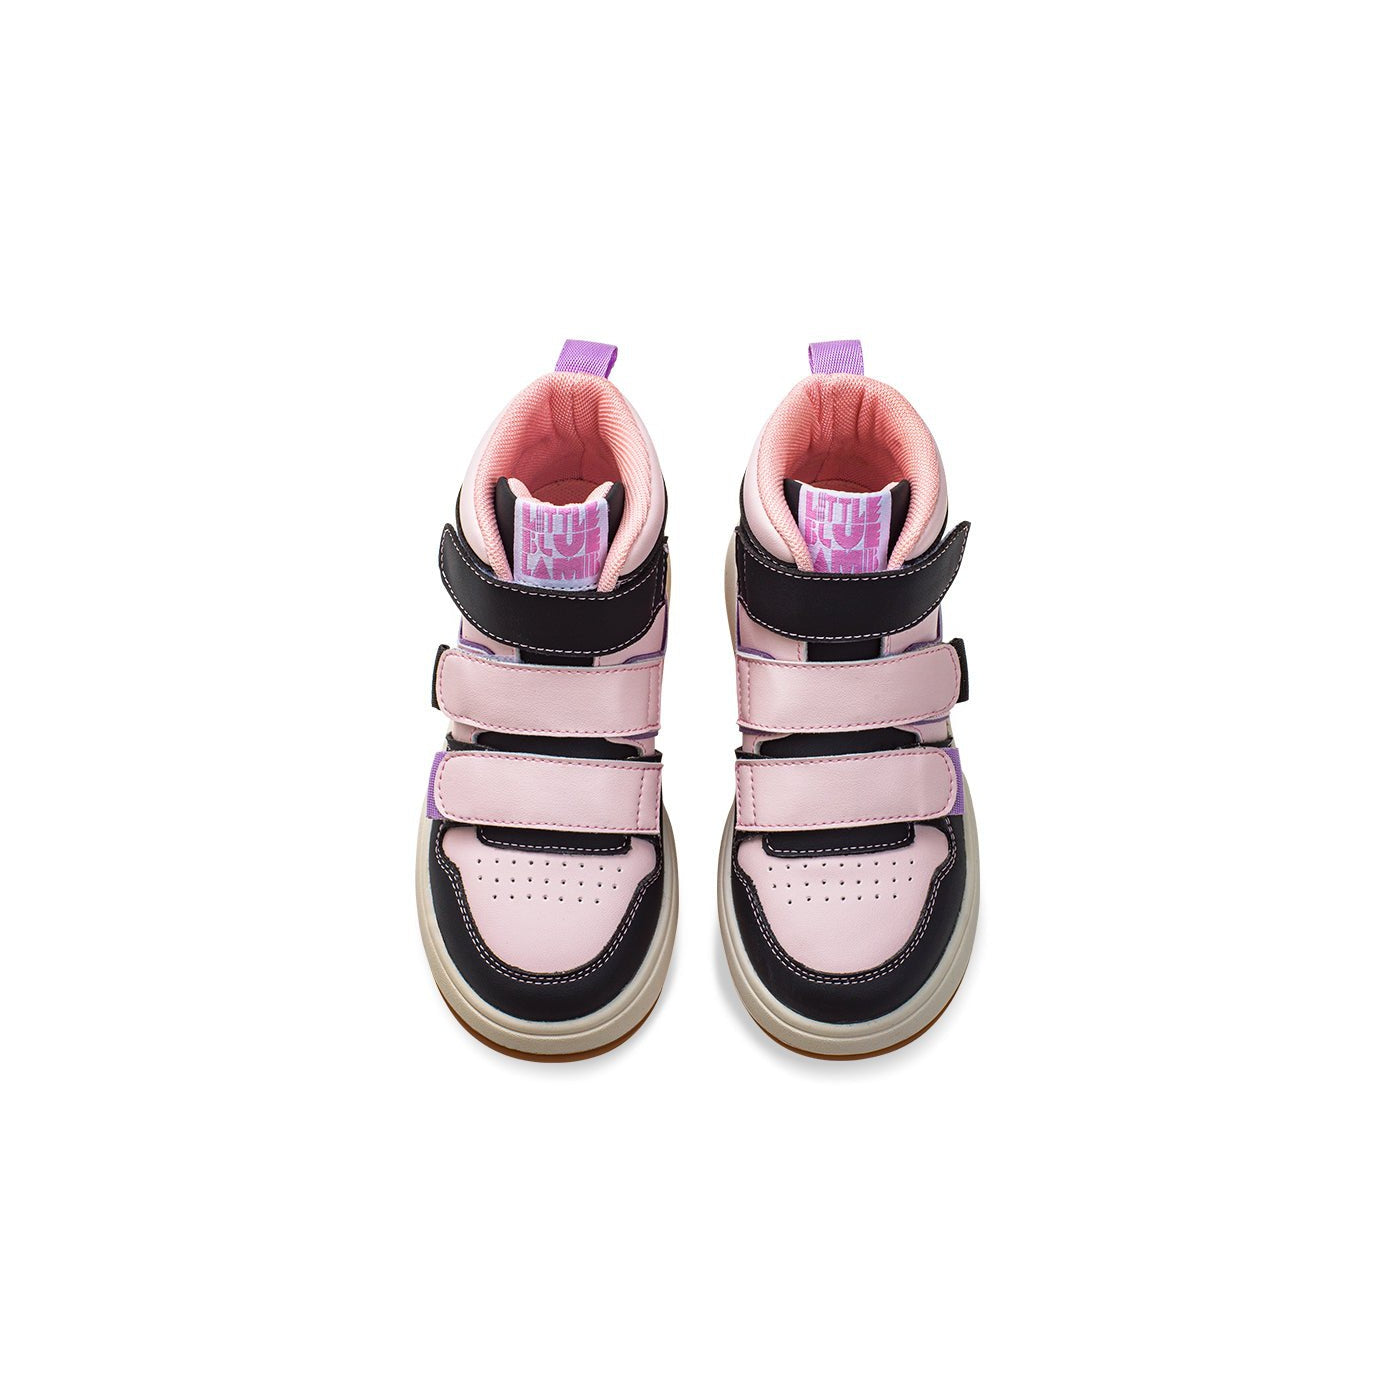 Walden Breathable Anti-slip Kids Pink Mid-top Sneakers - 0cm